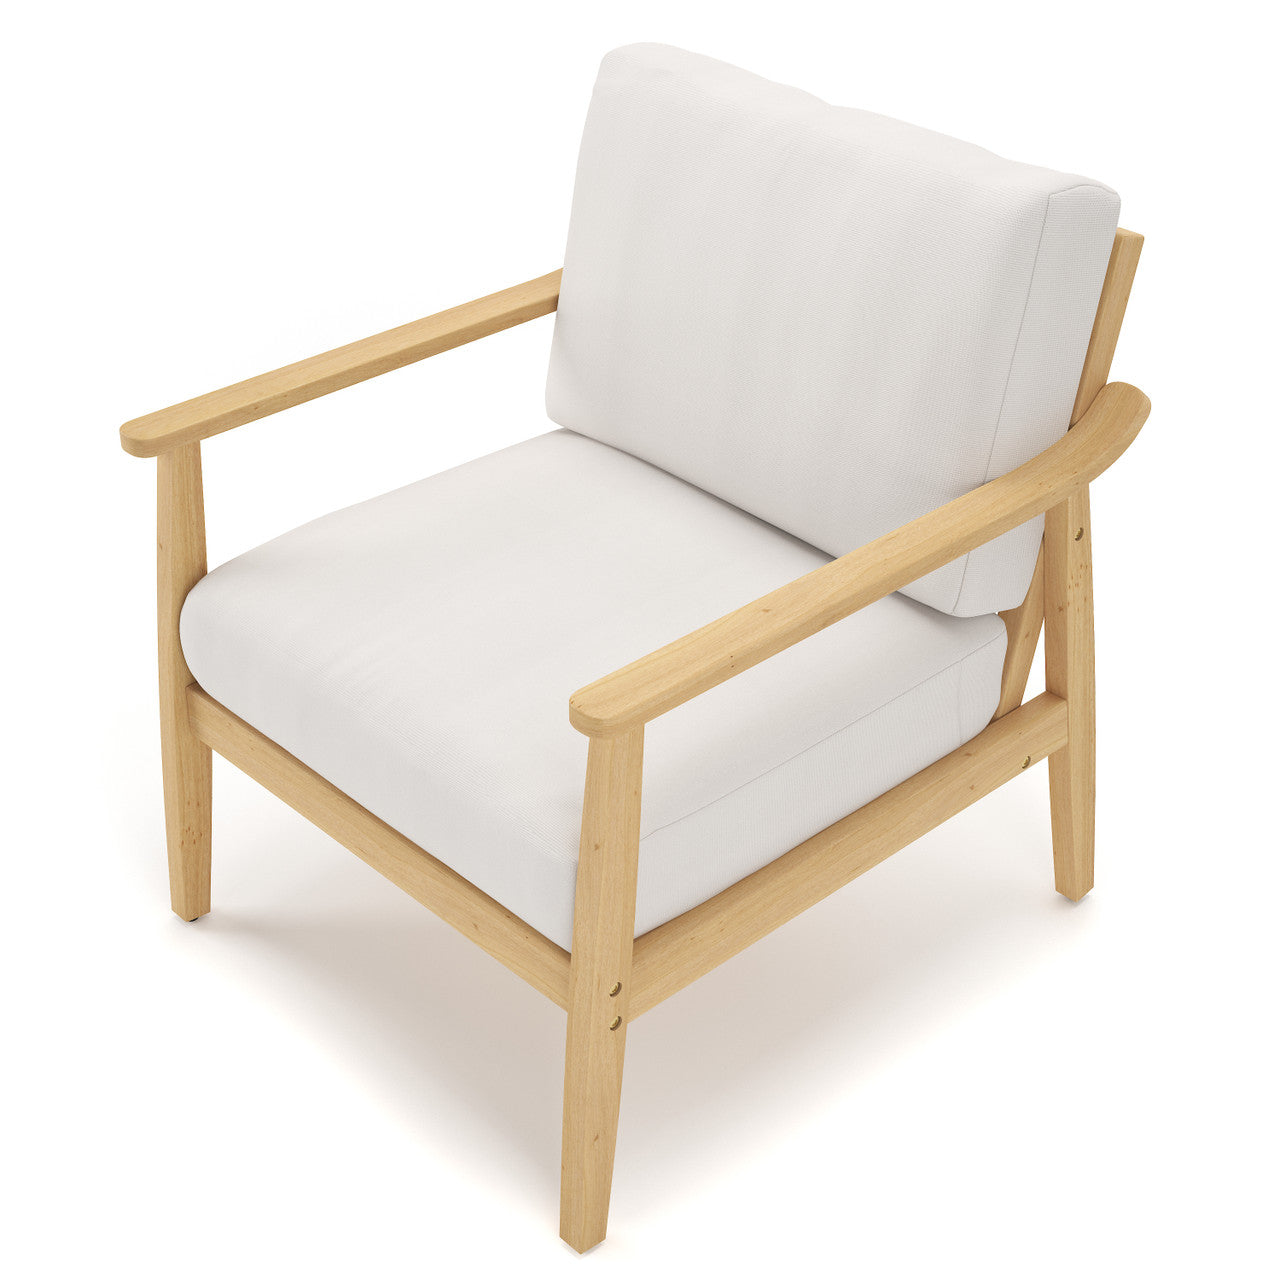 Forever Patio Hambrick Teak Hardwood Lounge Chair